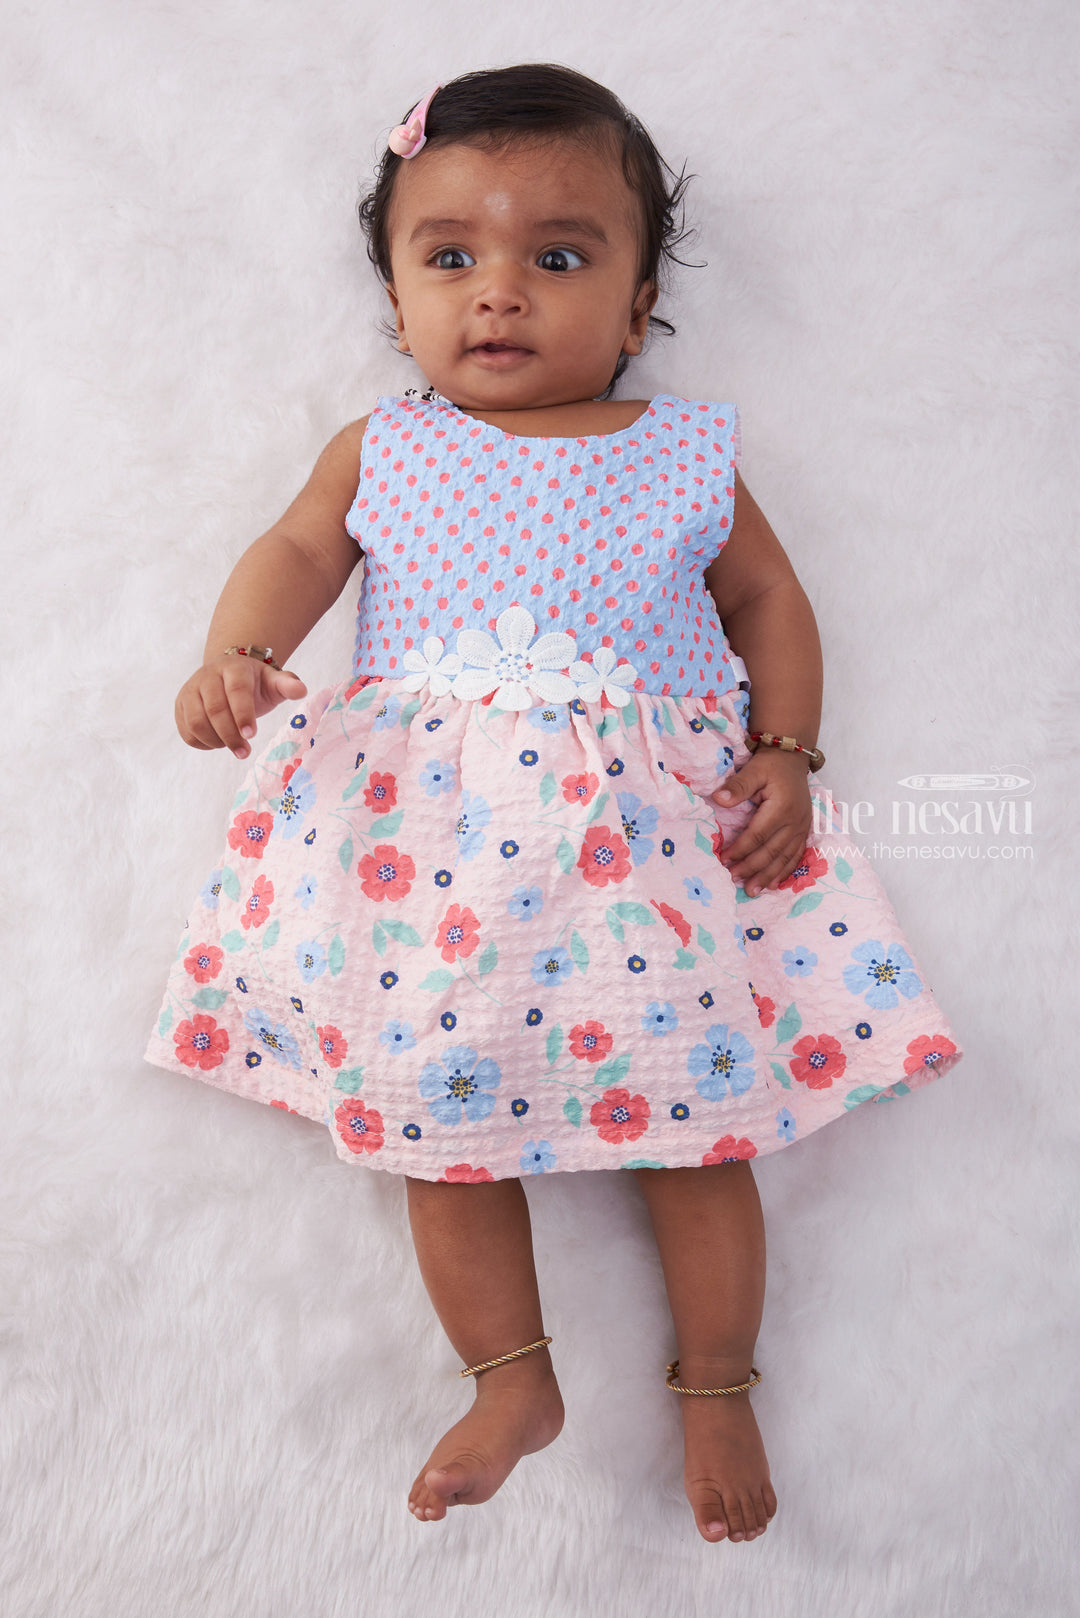 The Nesavu Baby Fancy Frock Salmon-Pink Chikan Dress: Floral & Blue Dot Yoke Nesavu 14 (6M) / Salmon BFJ438A-14 Floral Printed Pink Frock For Kids | Daily Wear Frock For Babys | The Nesavu